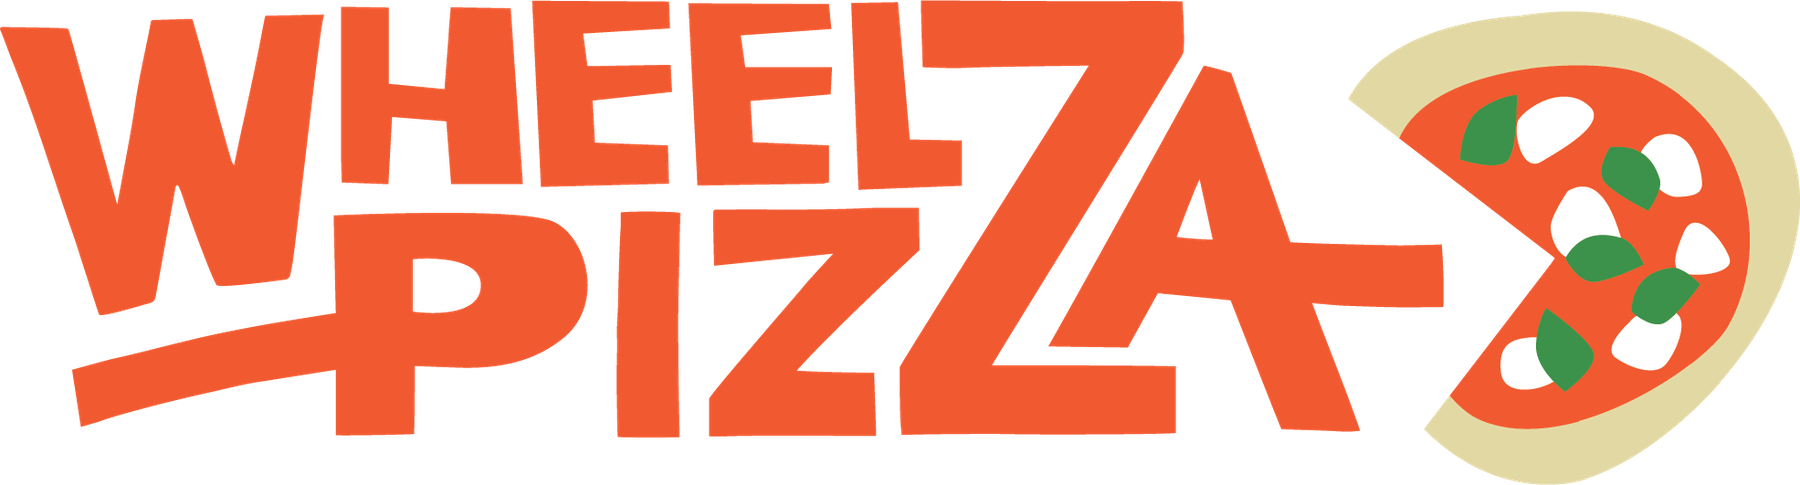 Wheelz Pizza Midtown Wilmington logo top